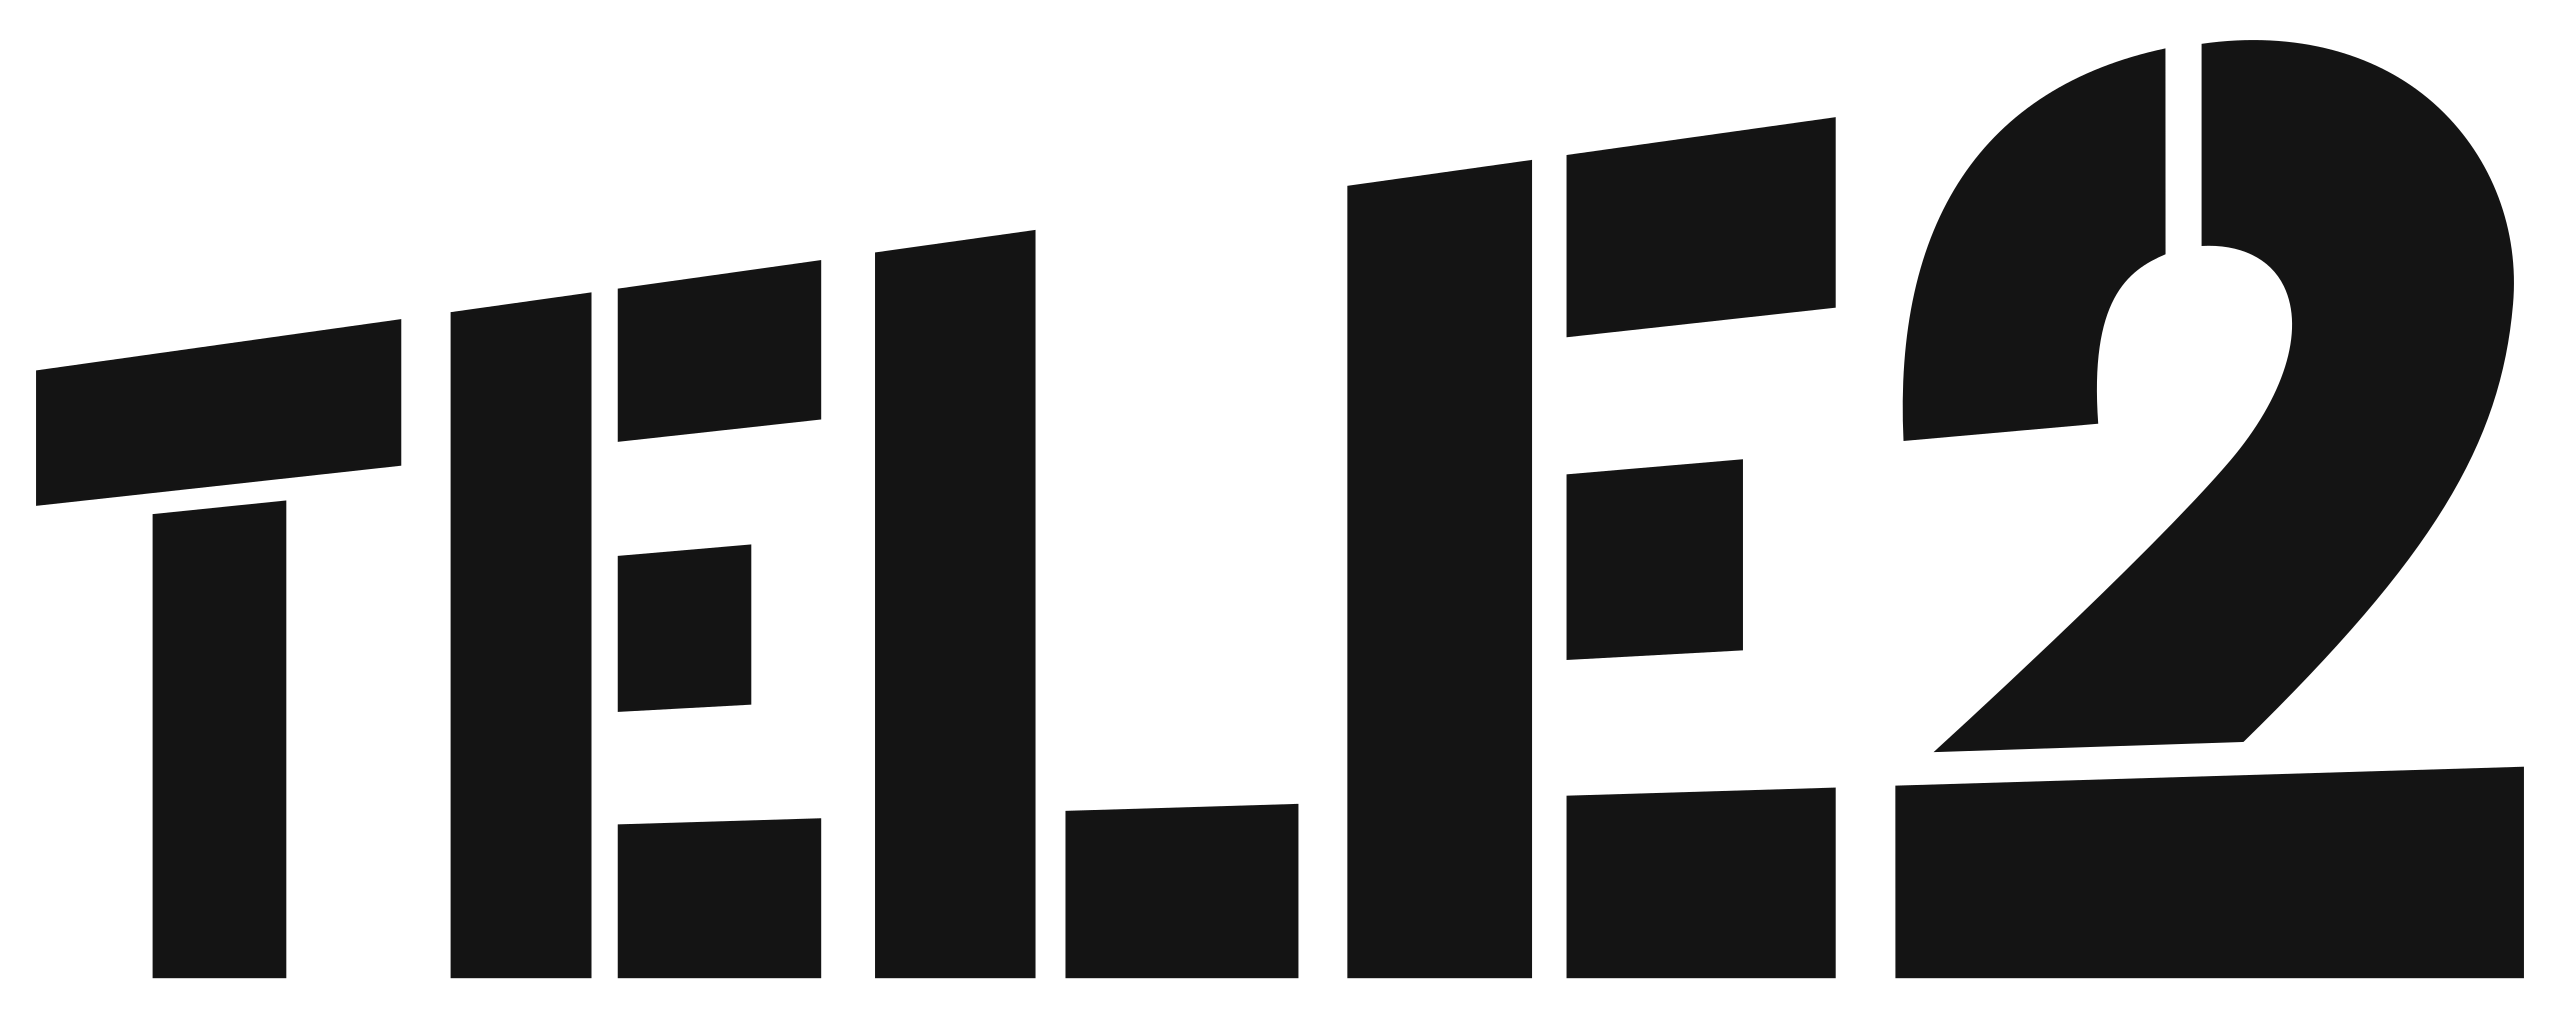 2560px-Tele2_logo.svg.png